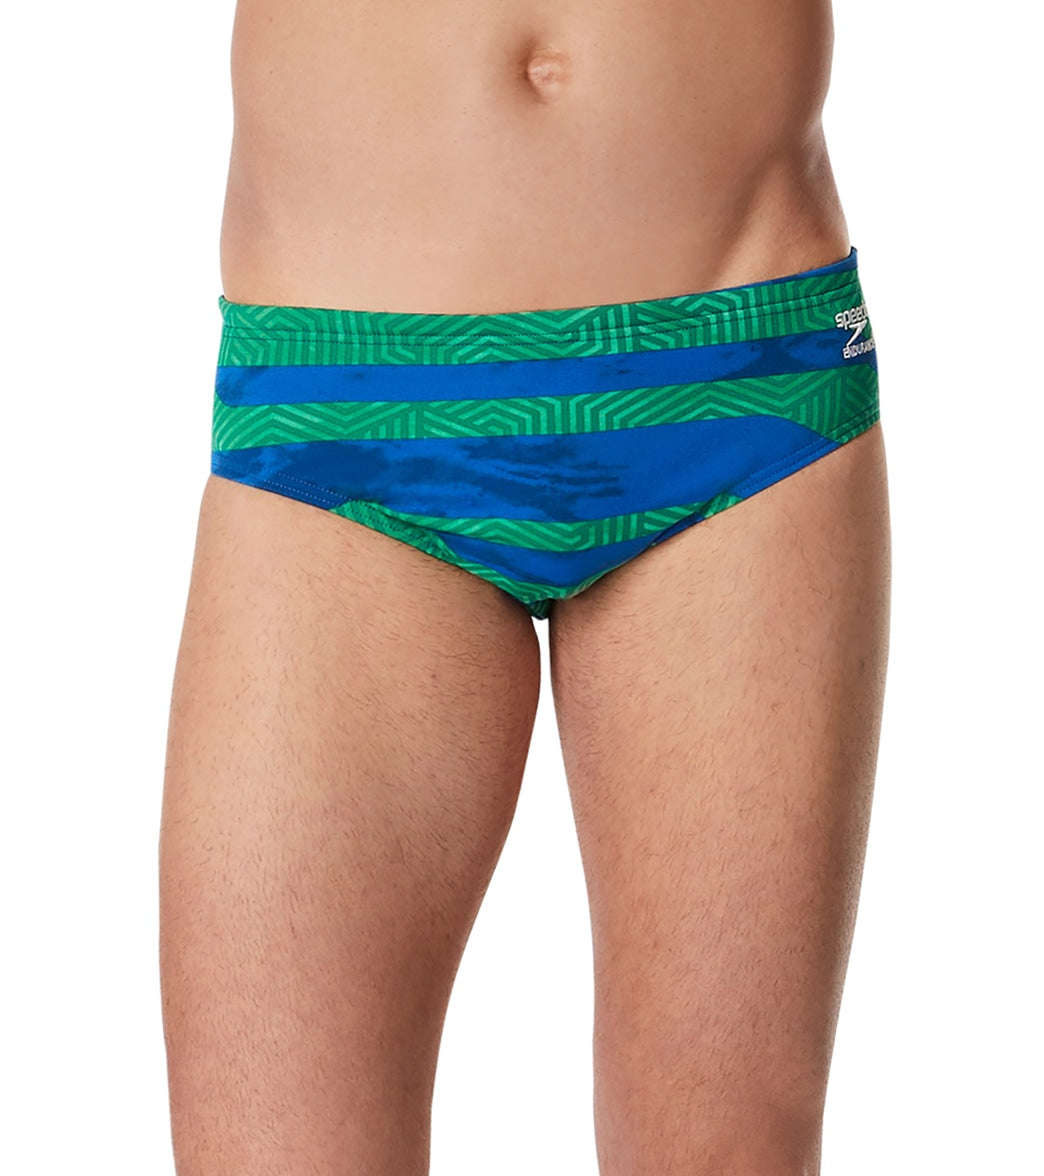 Speedo Men's Contort Stripes Brief Swimsuit at SwimOutlet.com